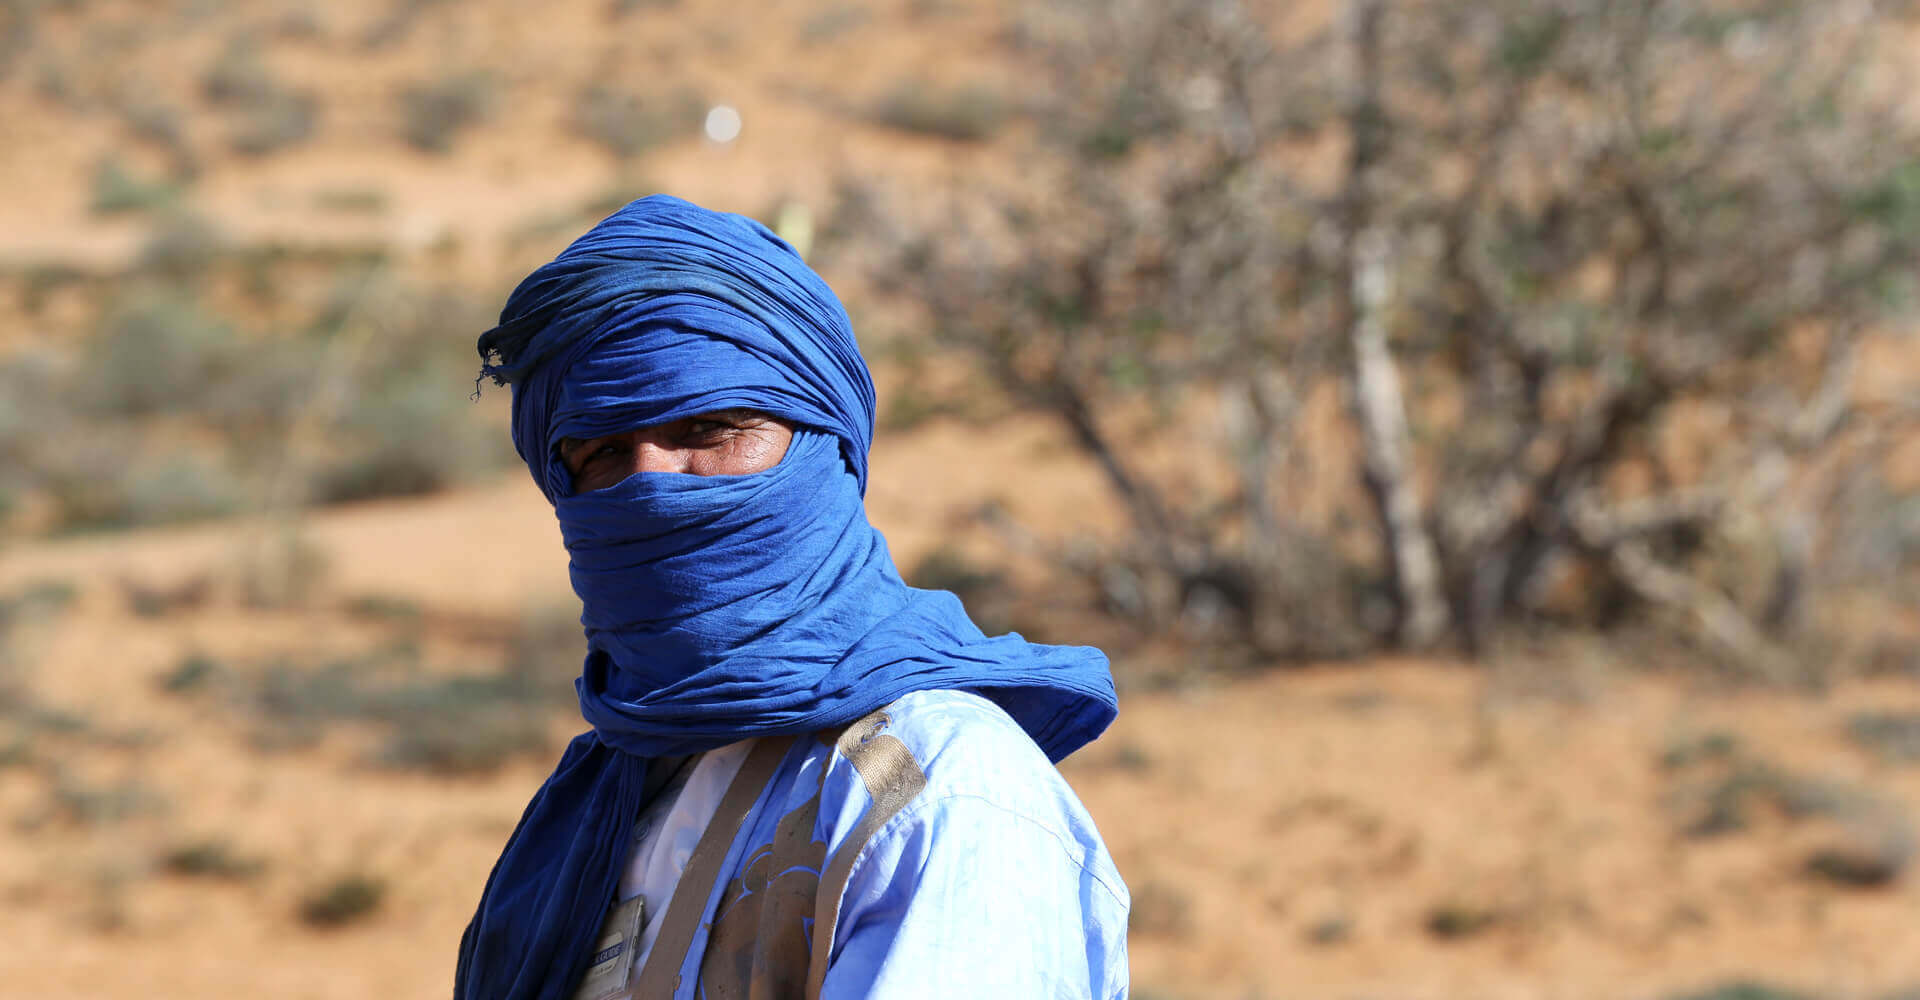 men with blue turban